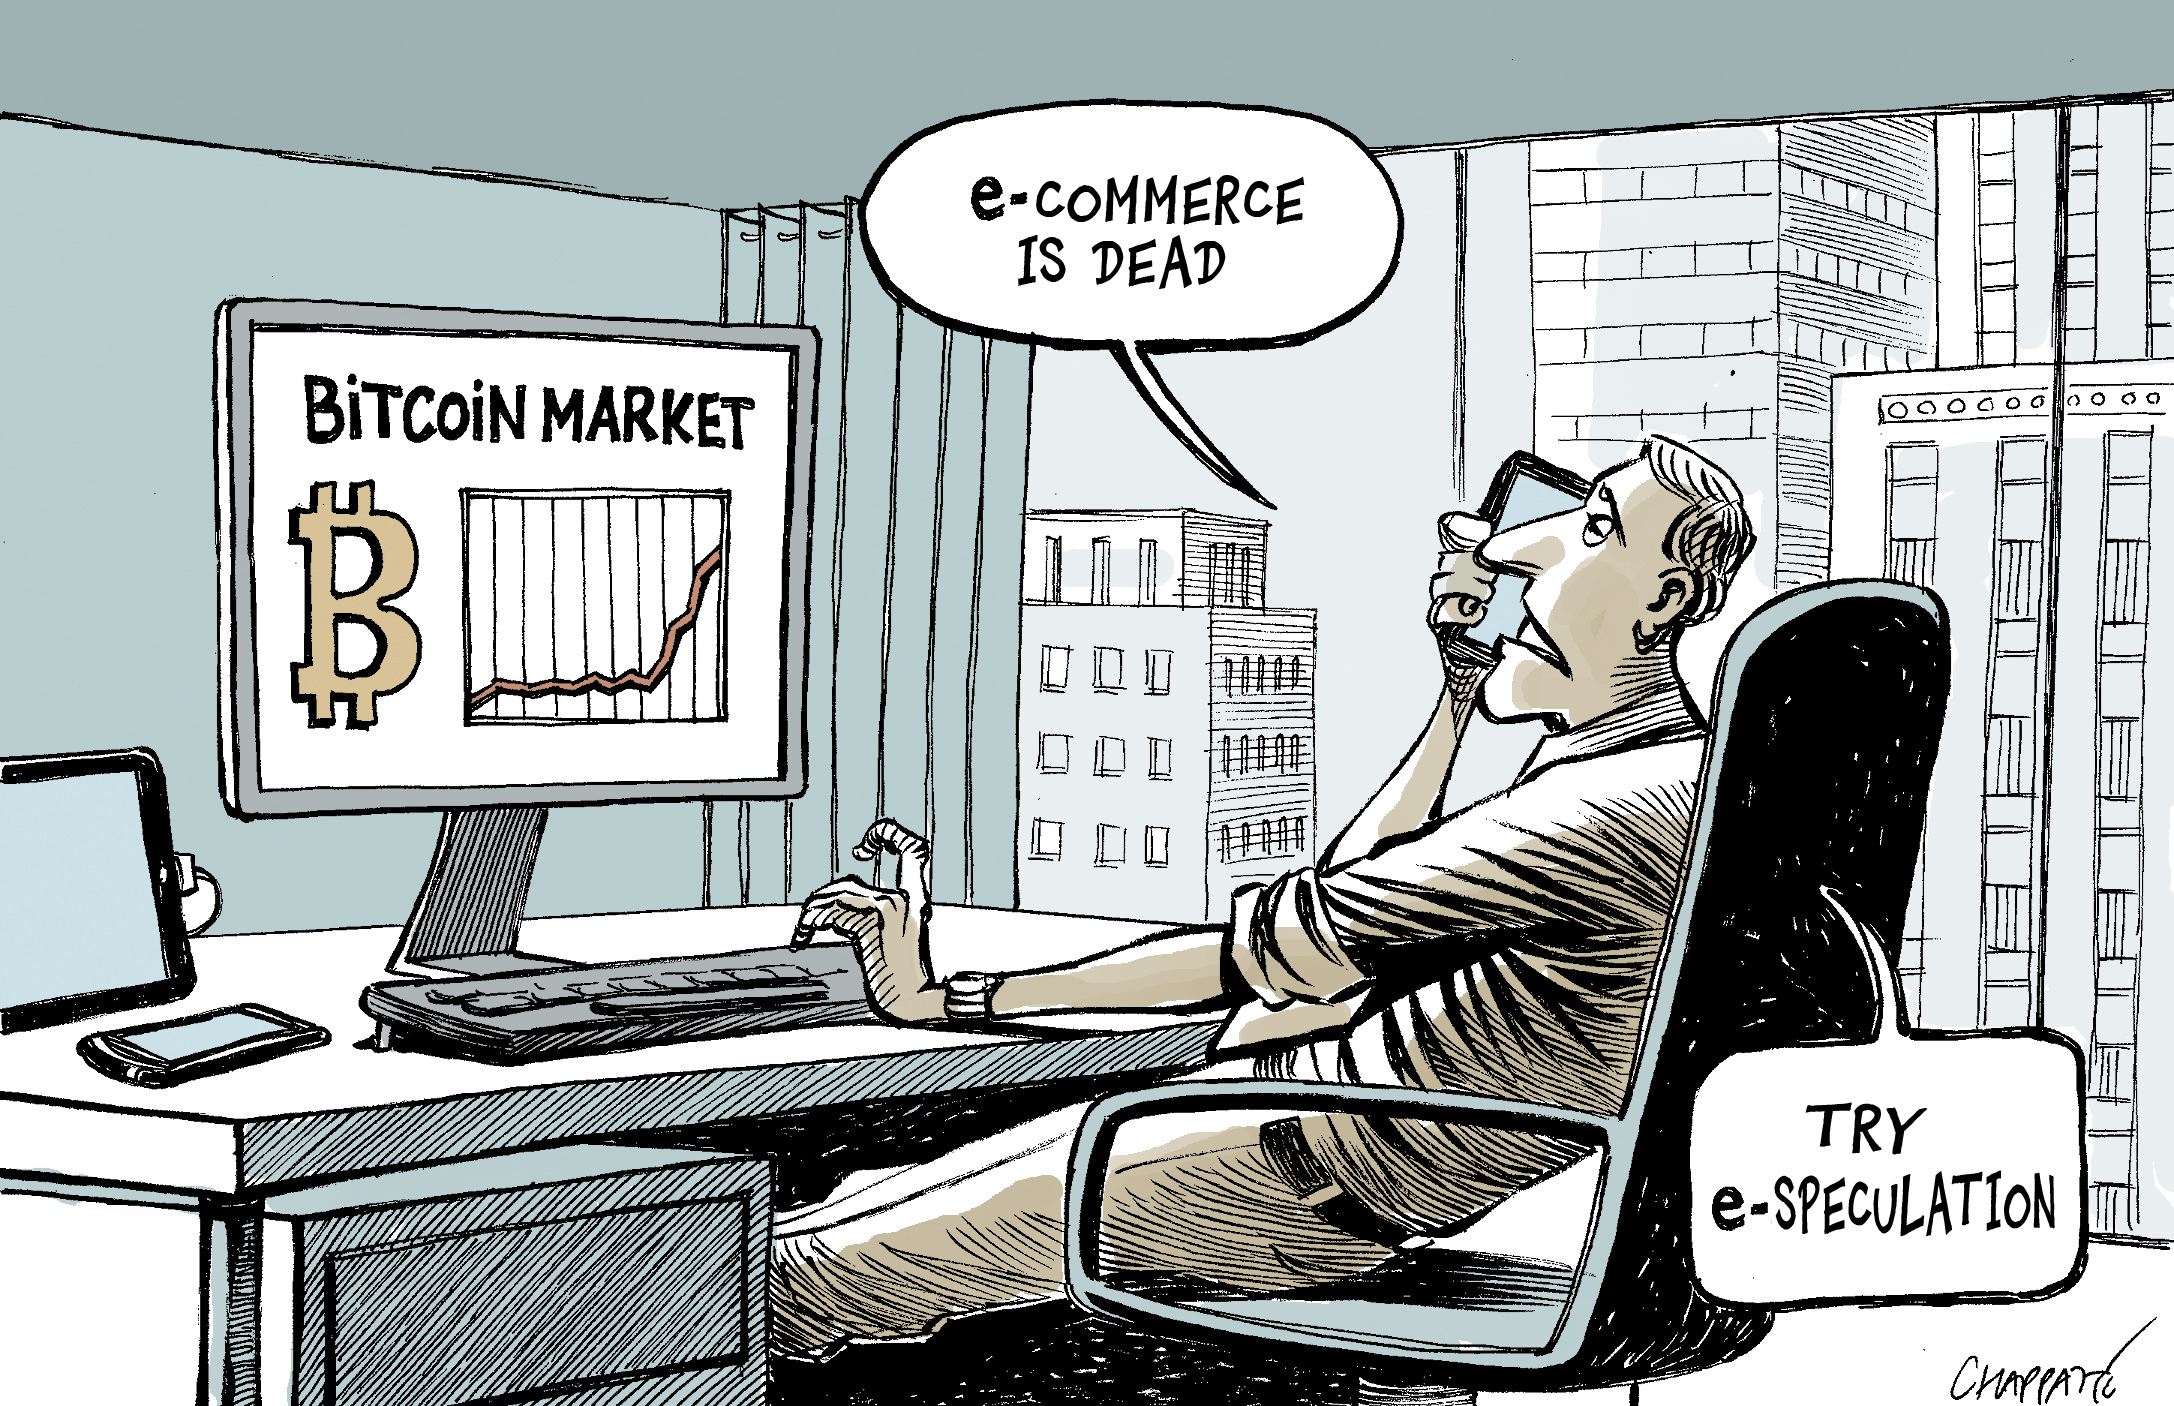 political betting bitcoin miner